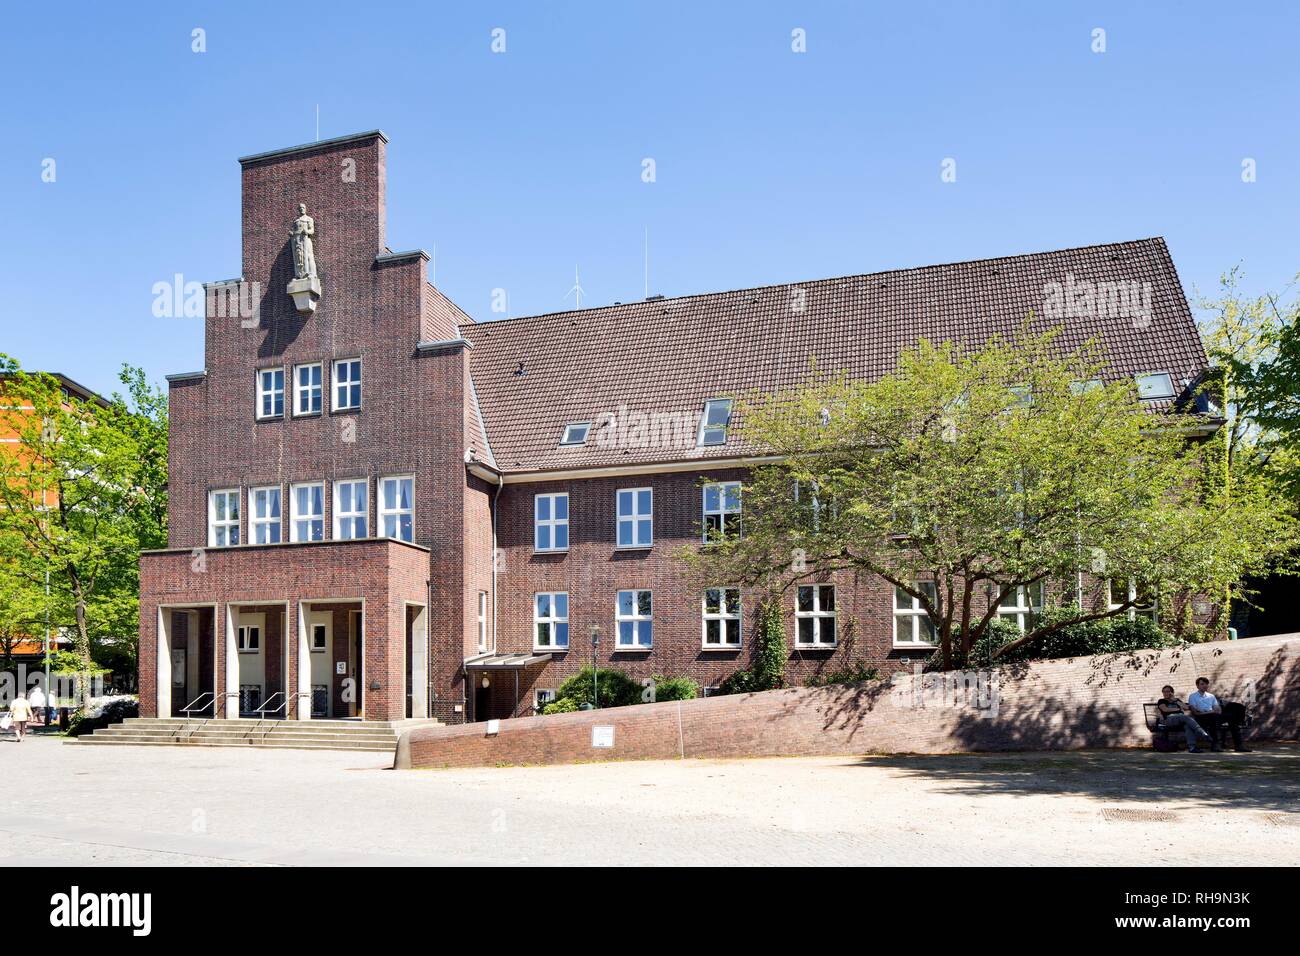 Old Town Hall, Wedel, Schleswig-Holstein, Allemagne Banque D'Images